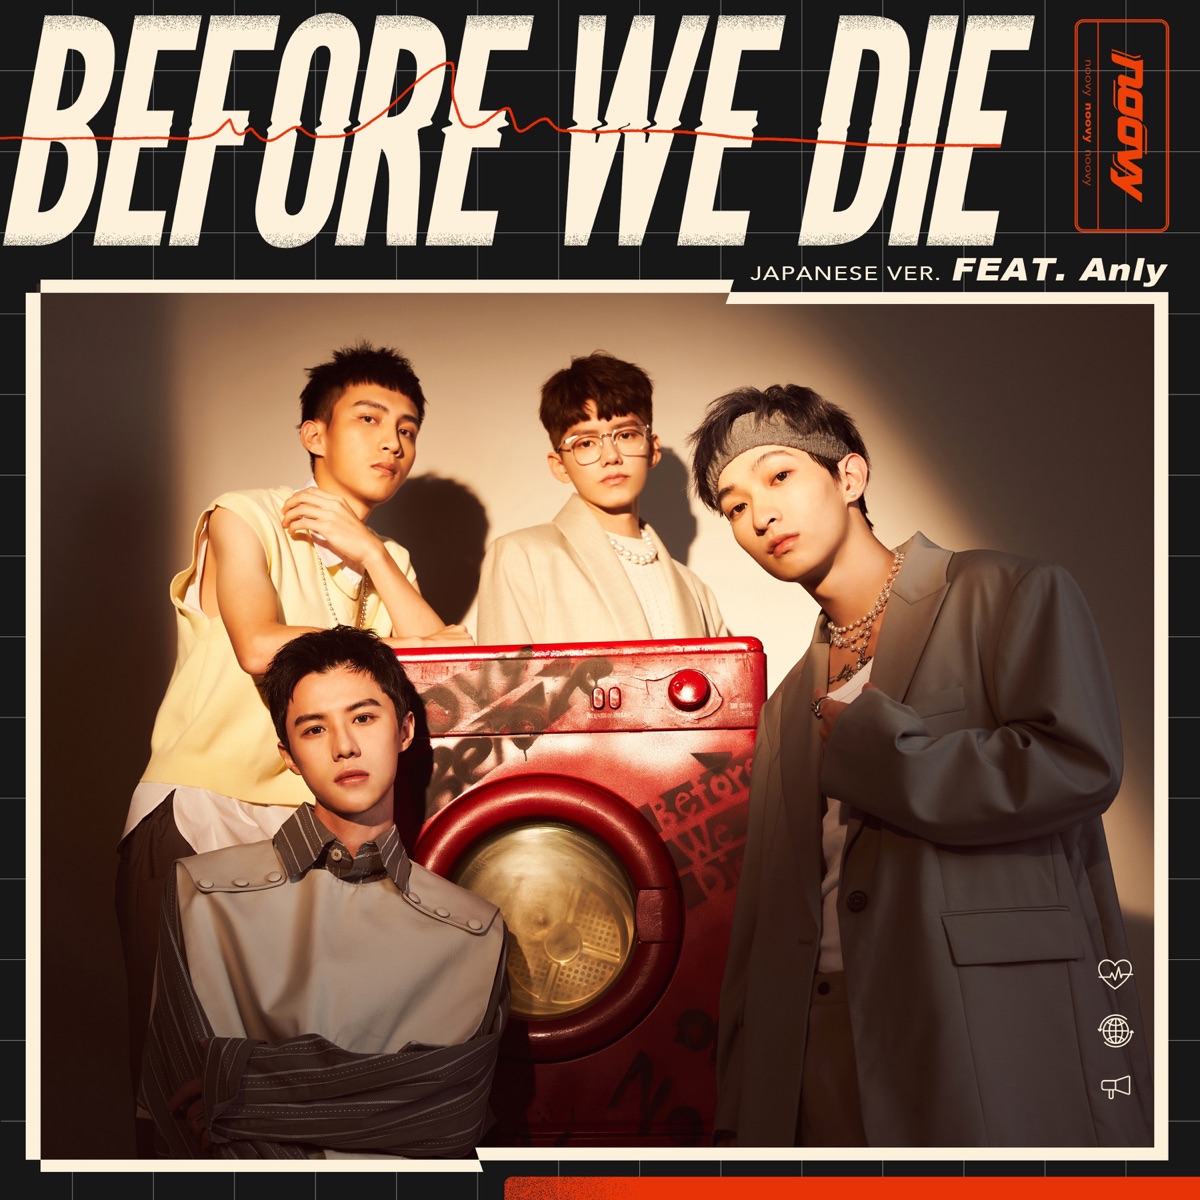 『noovy - Before We Die - Japanese ver. - (feat. Anly)』収録の『Before We Die - Japanese ver. - (feat. Anly)』ジャケット